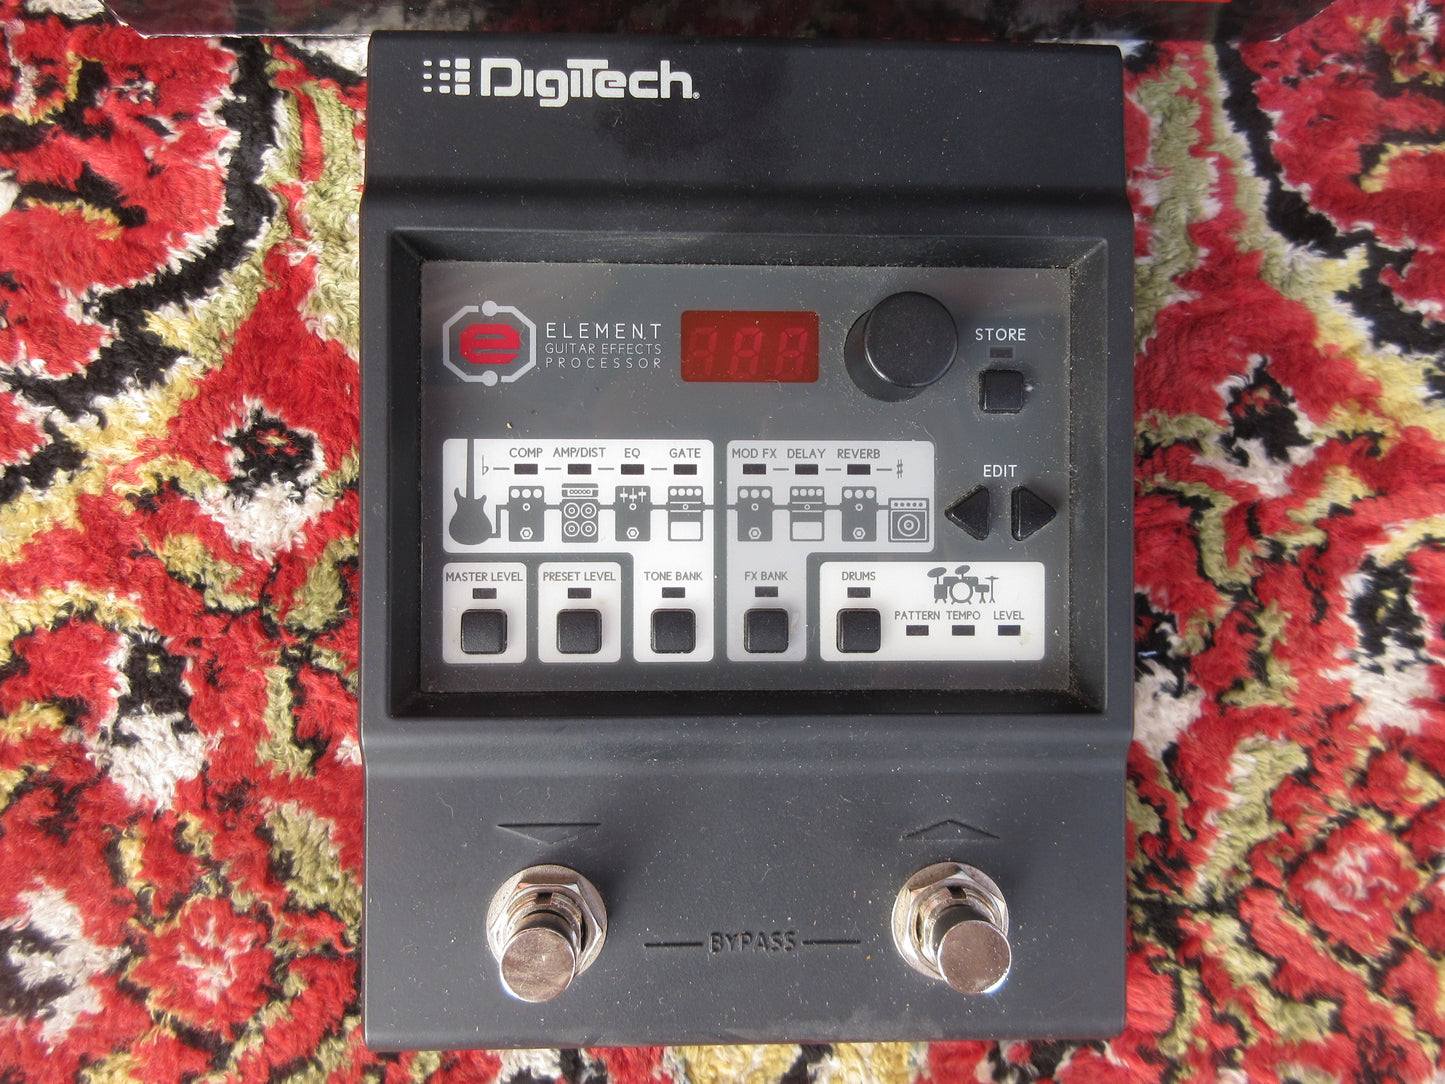 DIGITECH Element ELMTV-01 Processore multieffetto chitarra, usato.